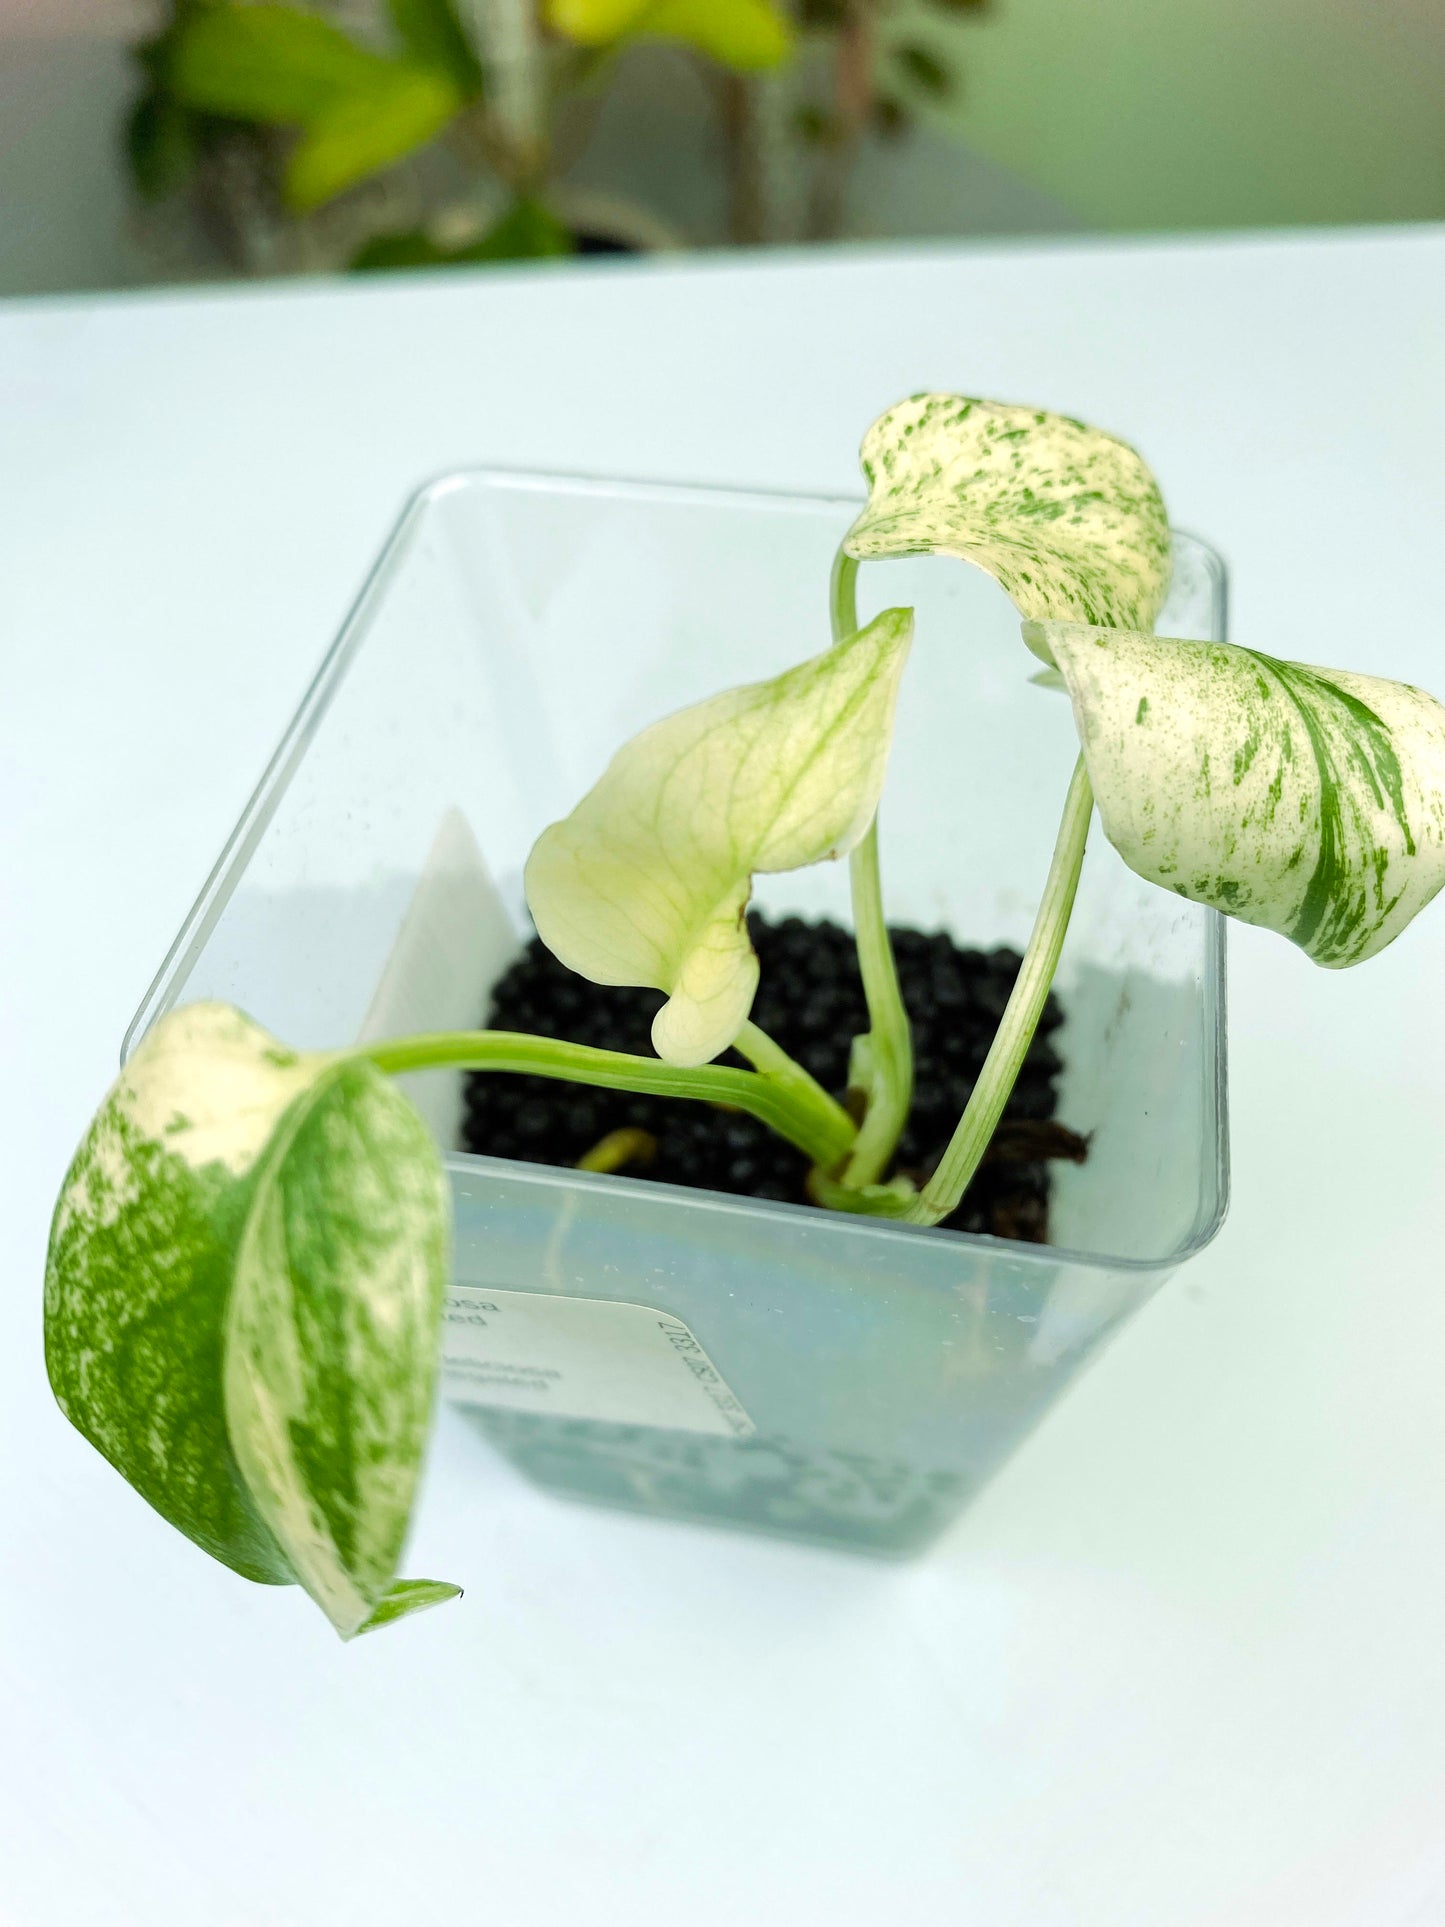 Monstera deliciosa "Mint" variegated (3:K3) [1417] | Rare Aroid | Exact Plant